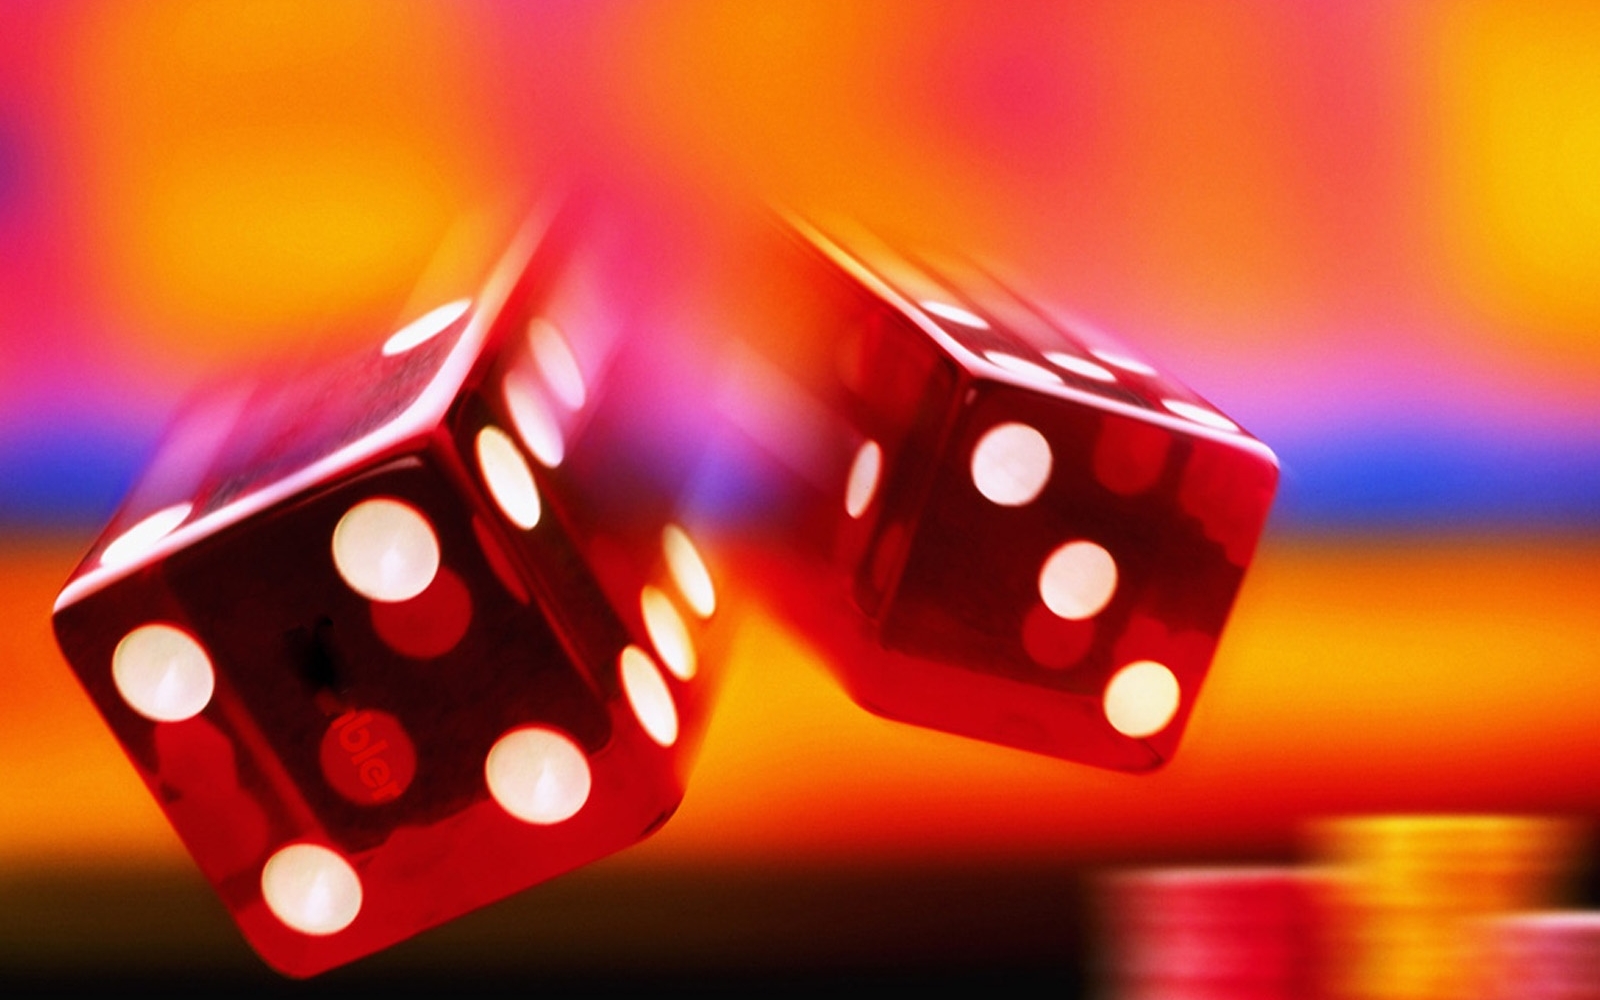 dice wallpaper,dice game,games,red,dice,light